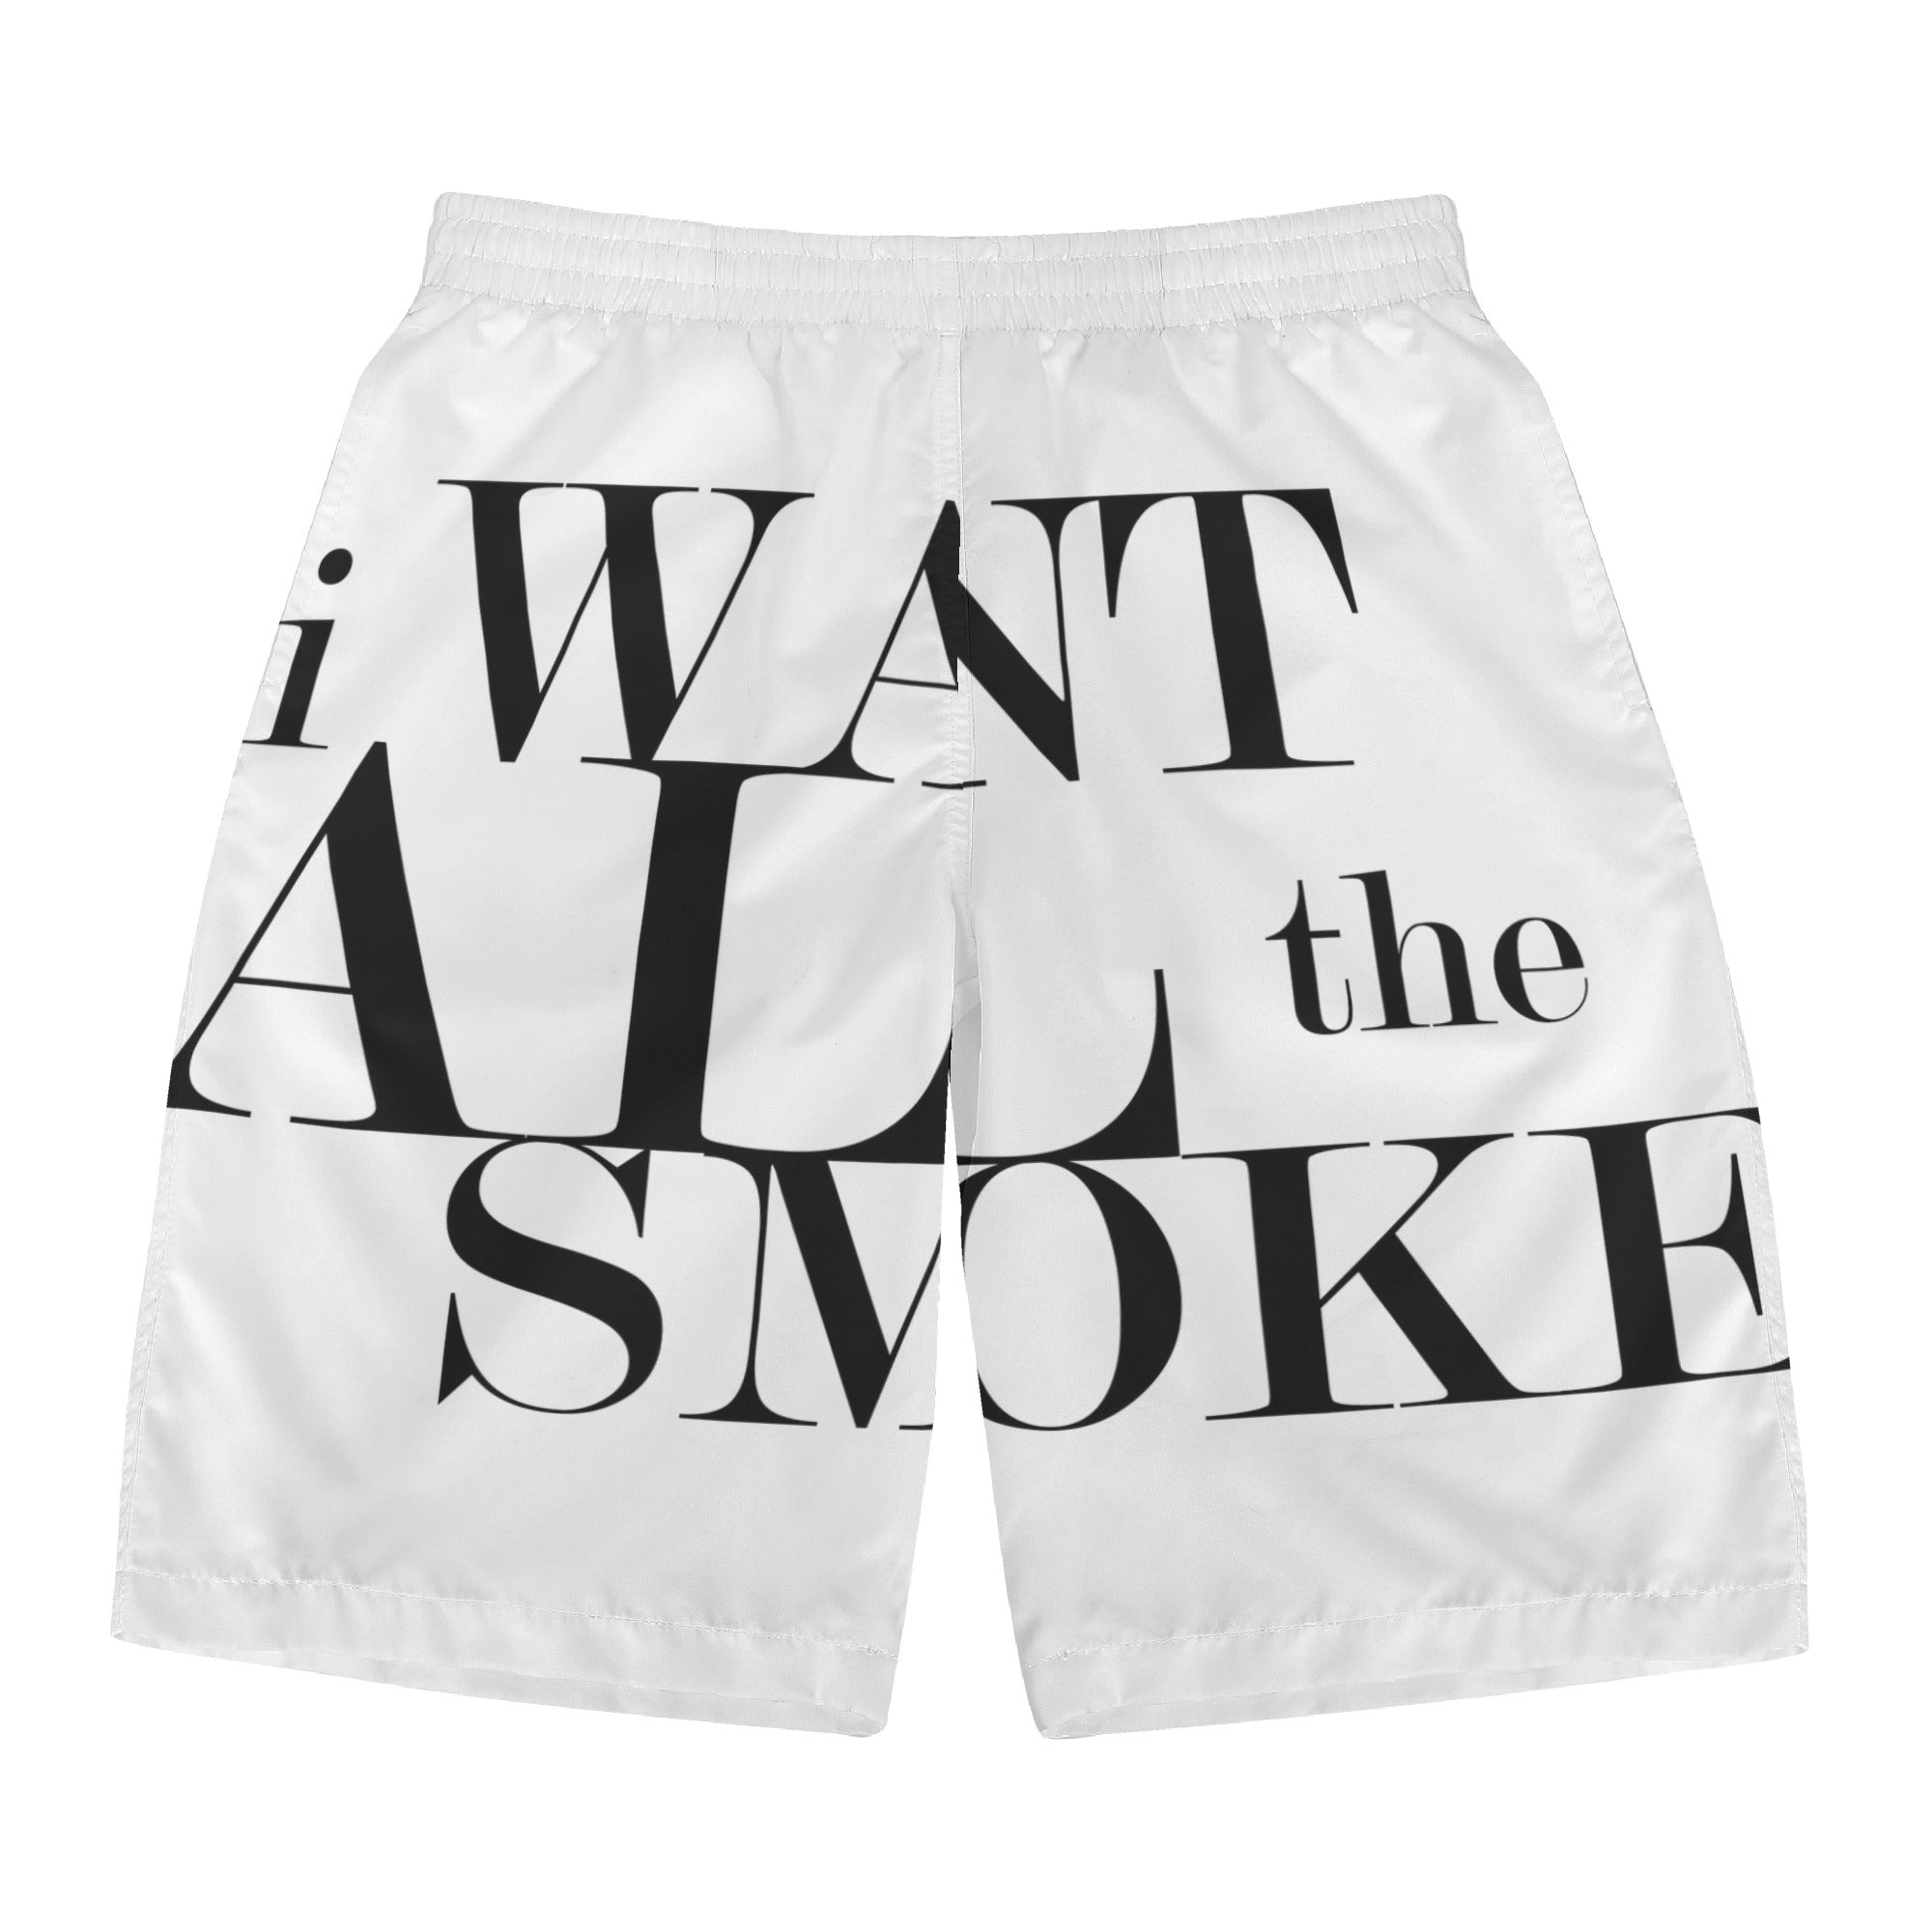 I Want All The Smoke Men's Board Shorts